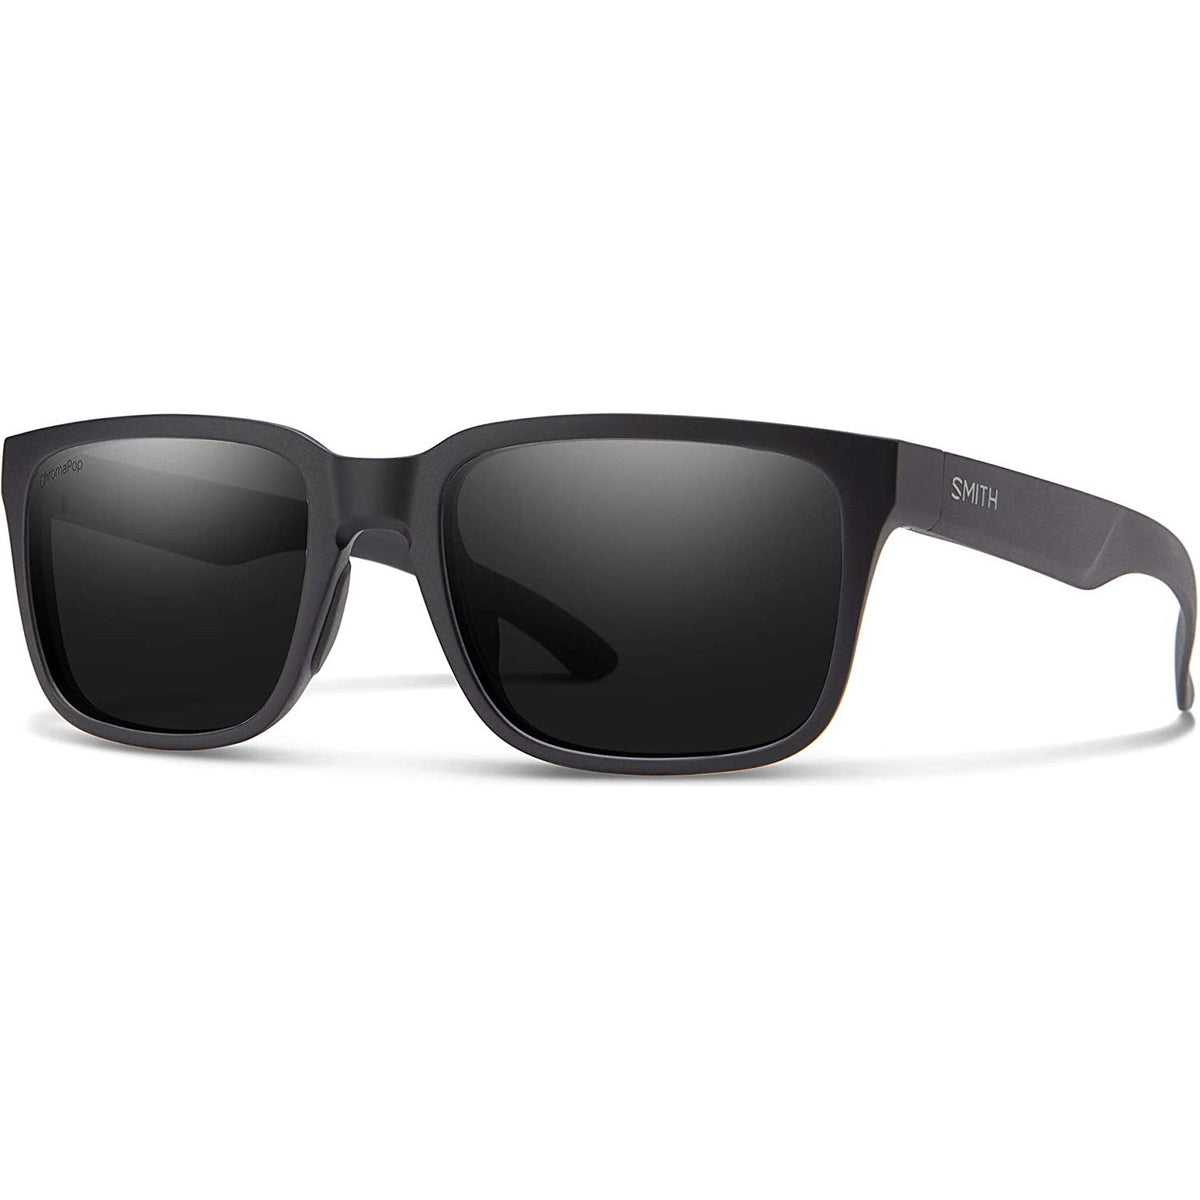 Smith Optics Headliner Sunglasses